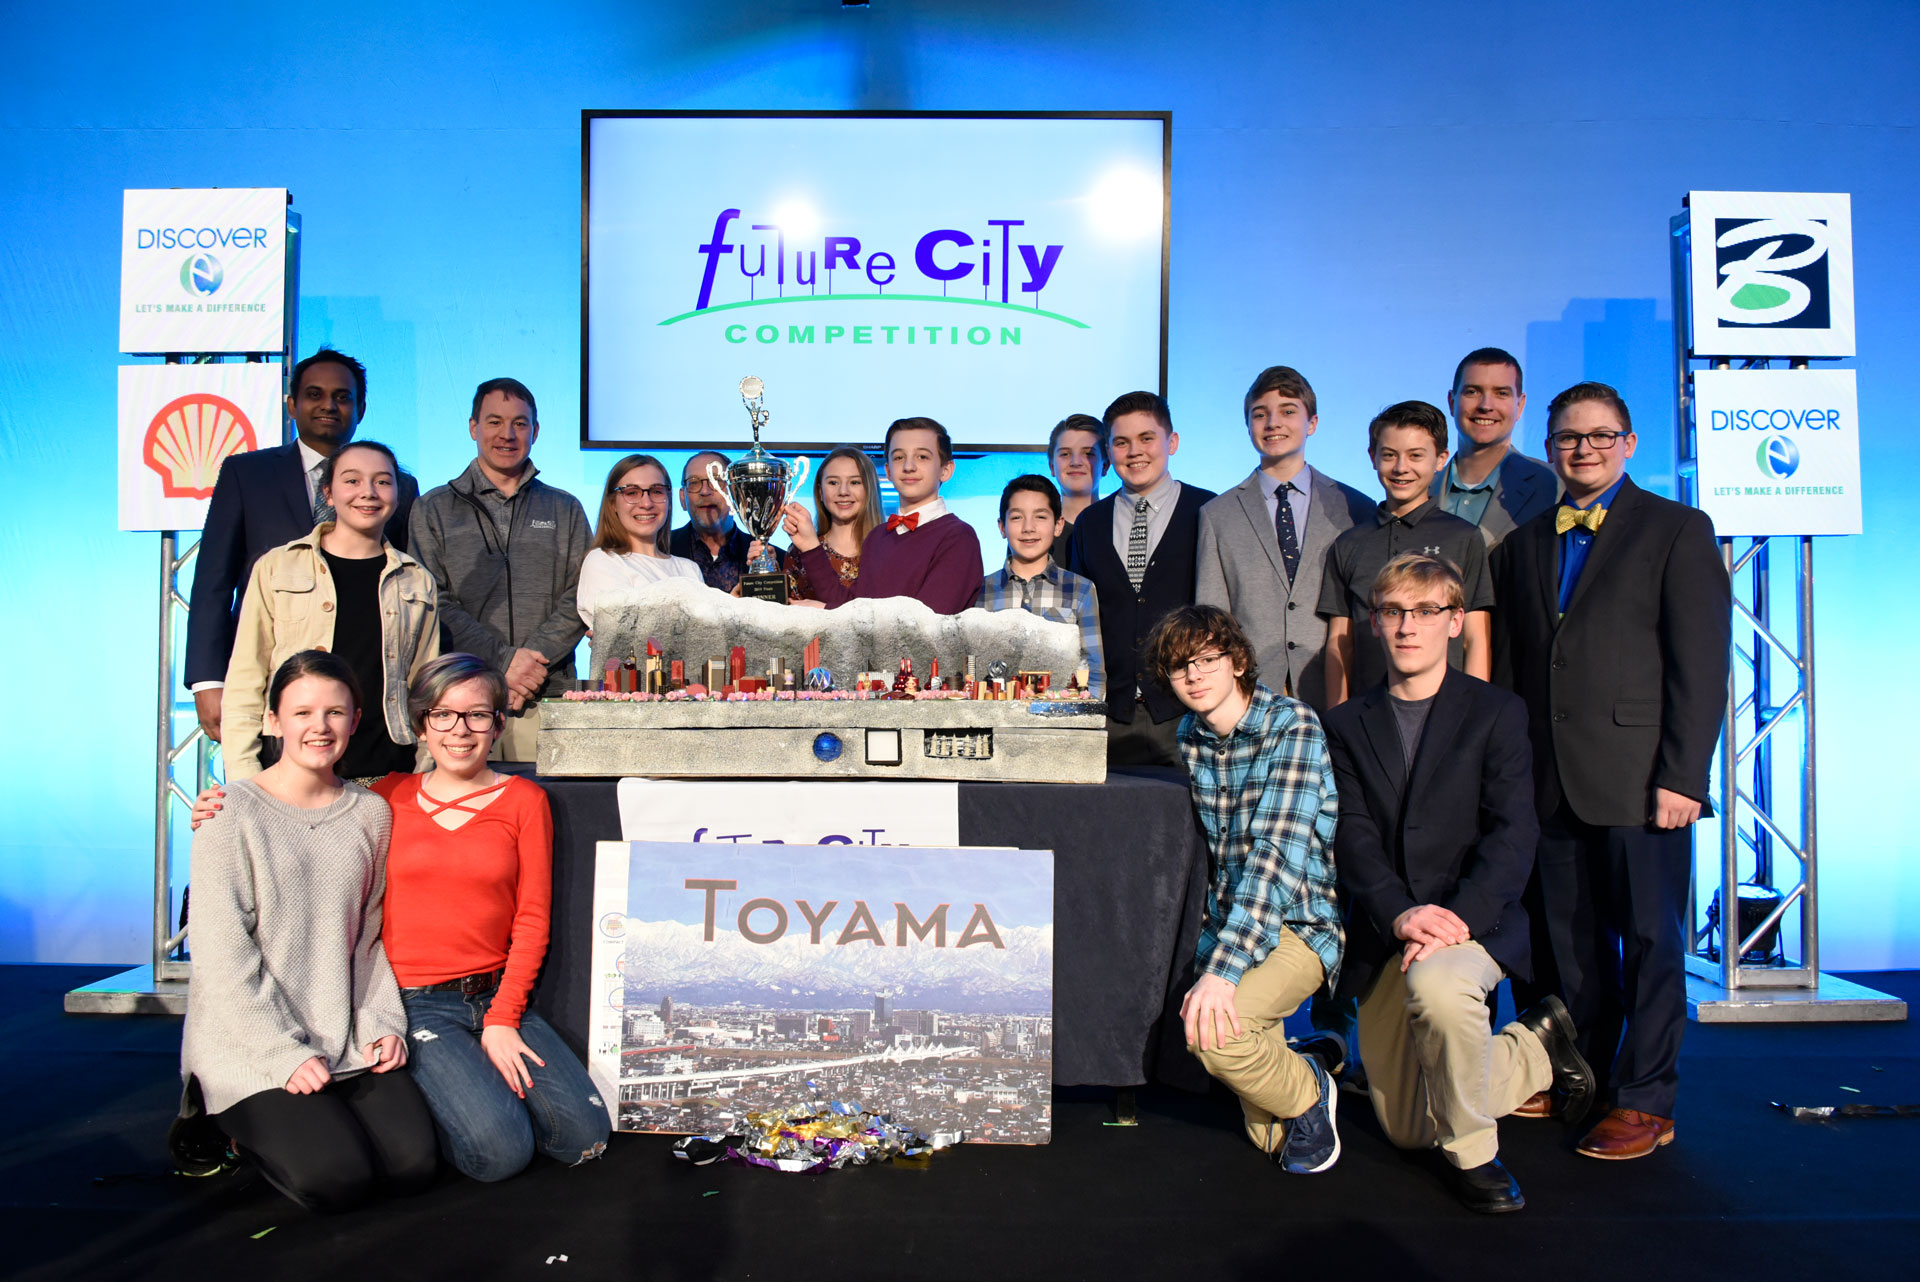 DiscoverE Fun City competition participants